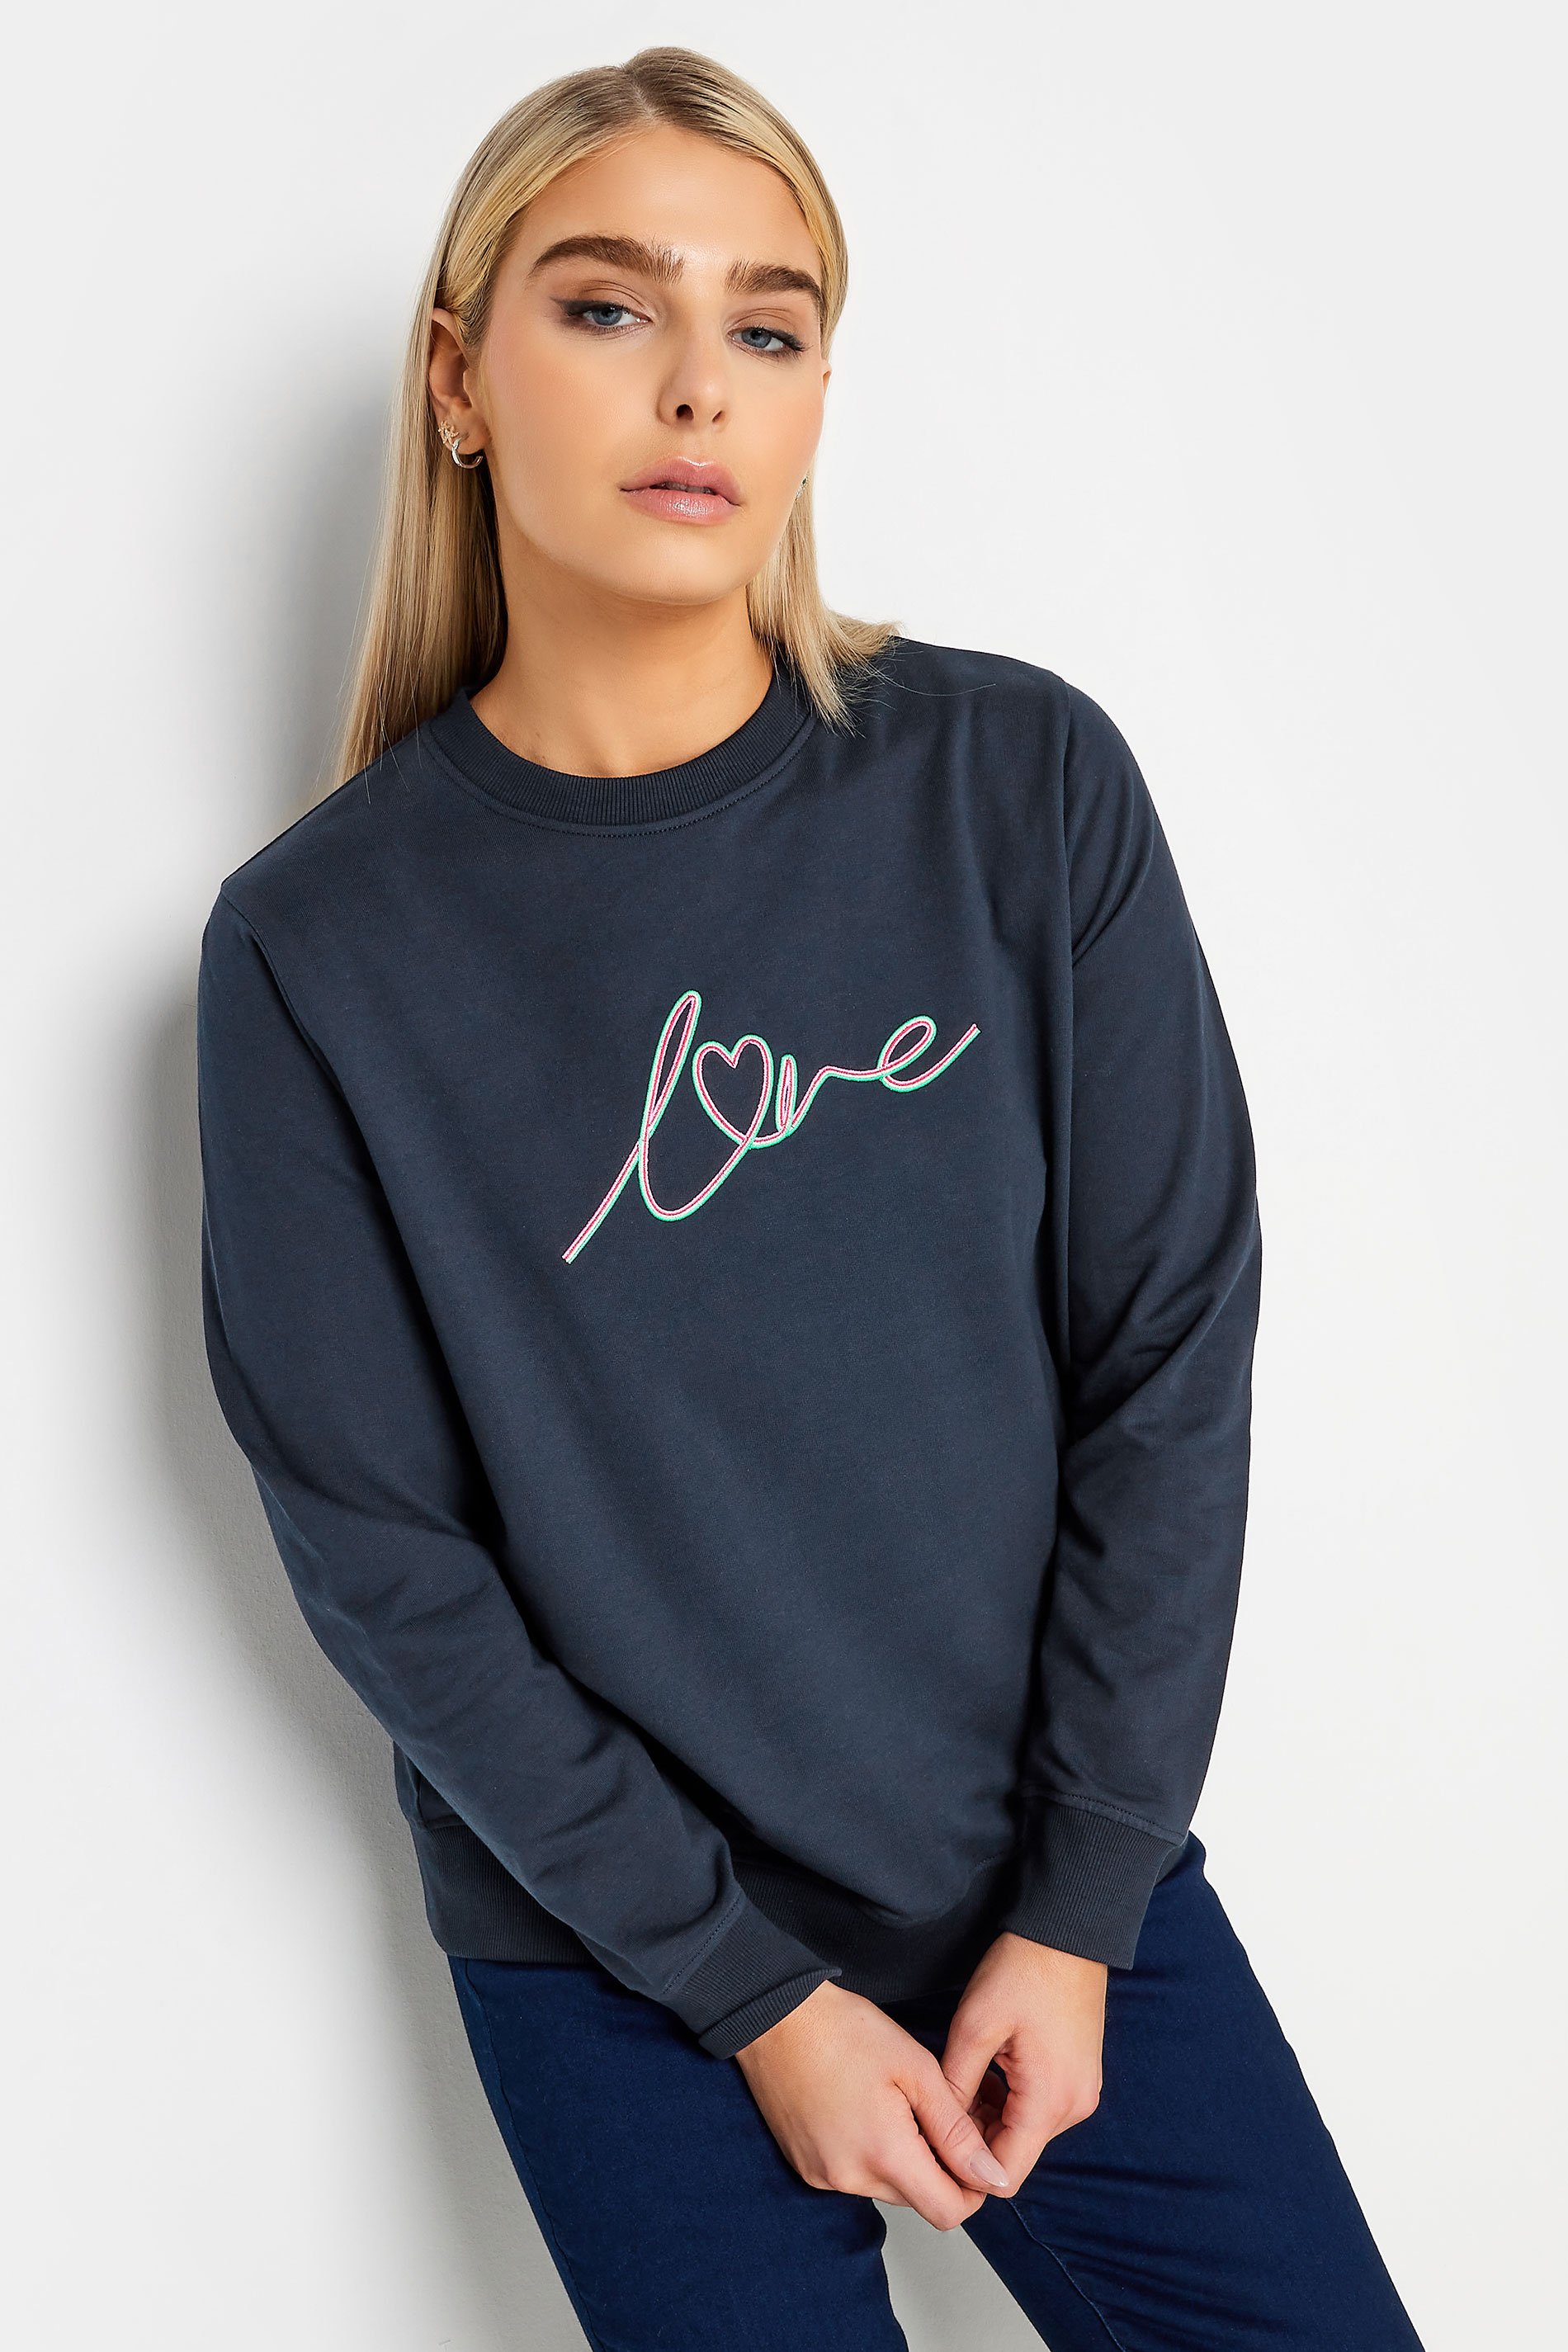 M&Co Navy Blue 'Love' Slogan Crew Neck Sweatshirt | M&Co 1